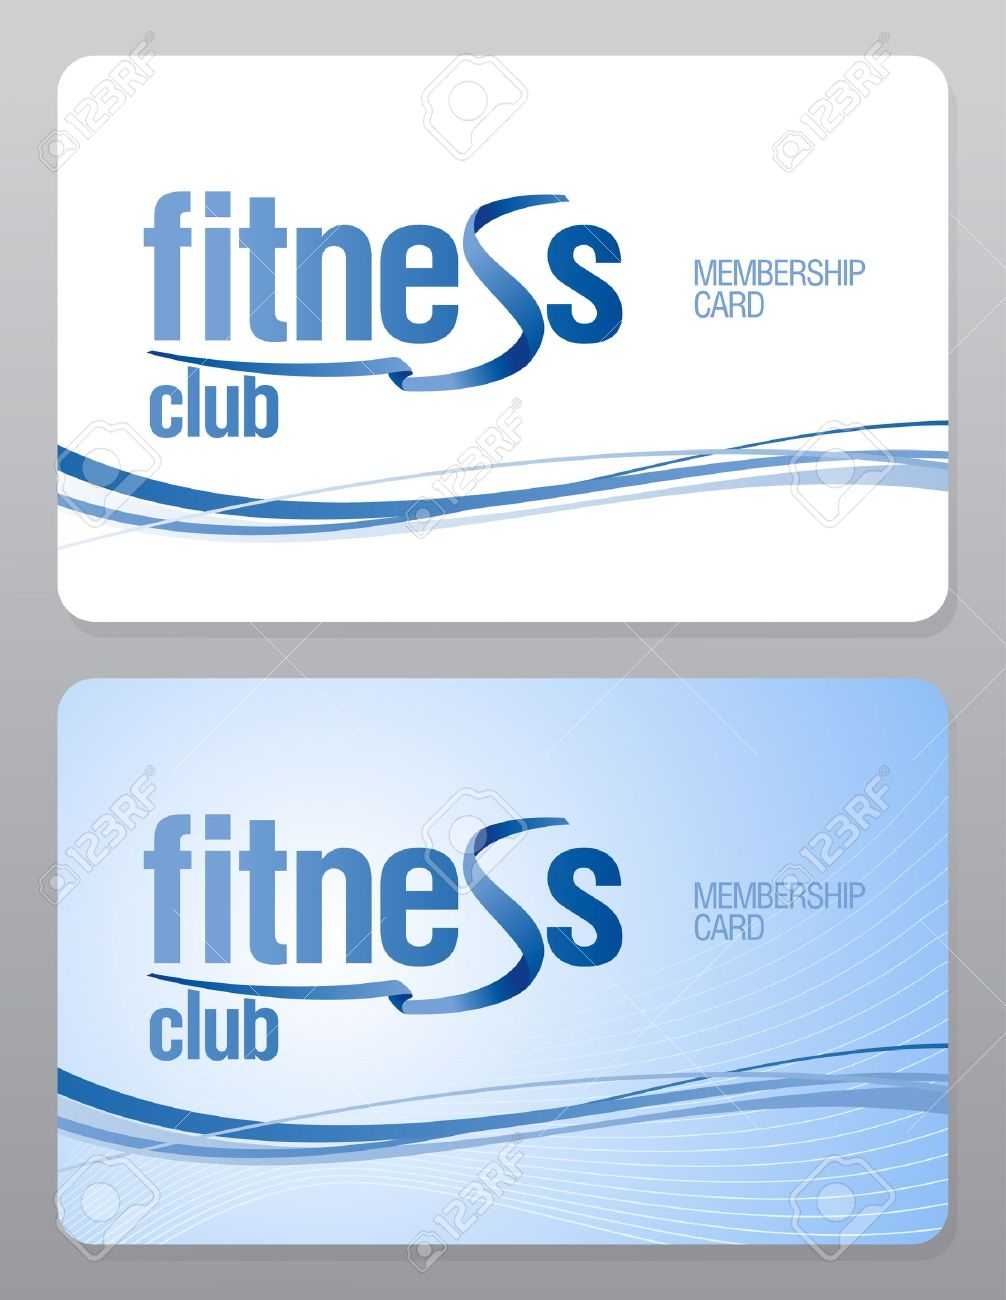 Fitness Club Membership Card Design Template. In Template For Membership Cards